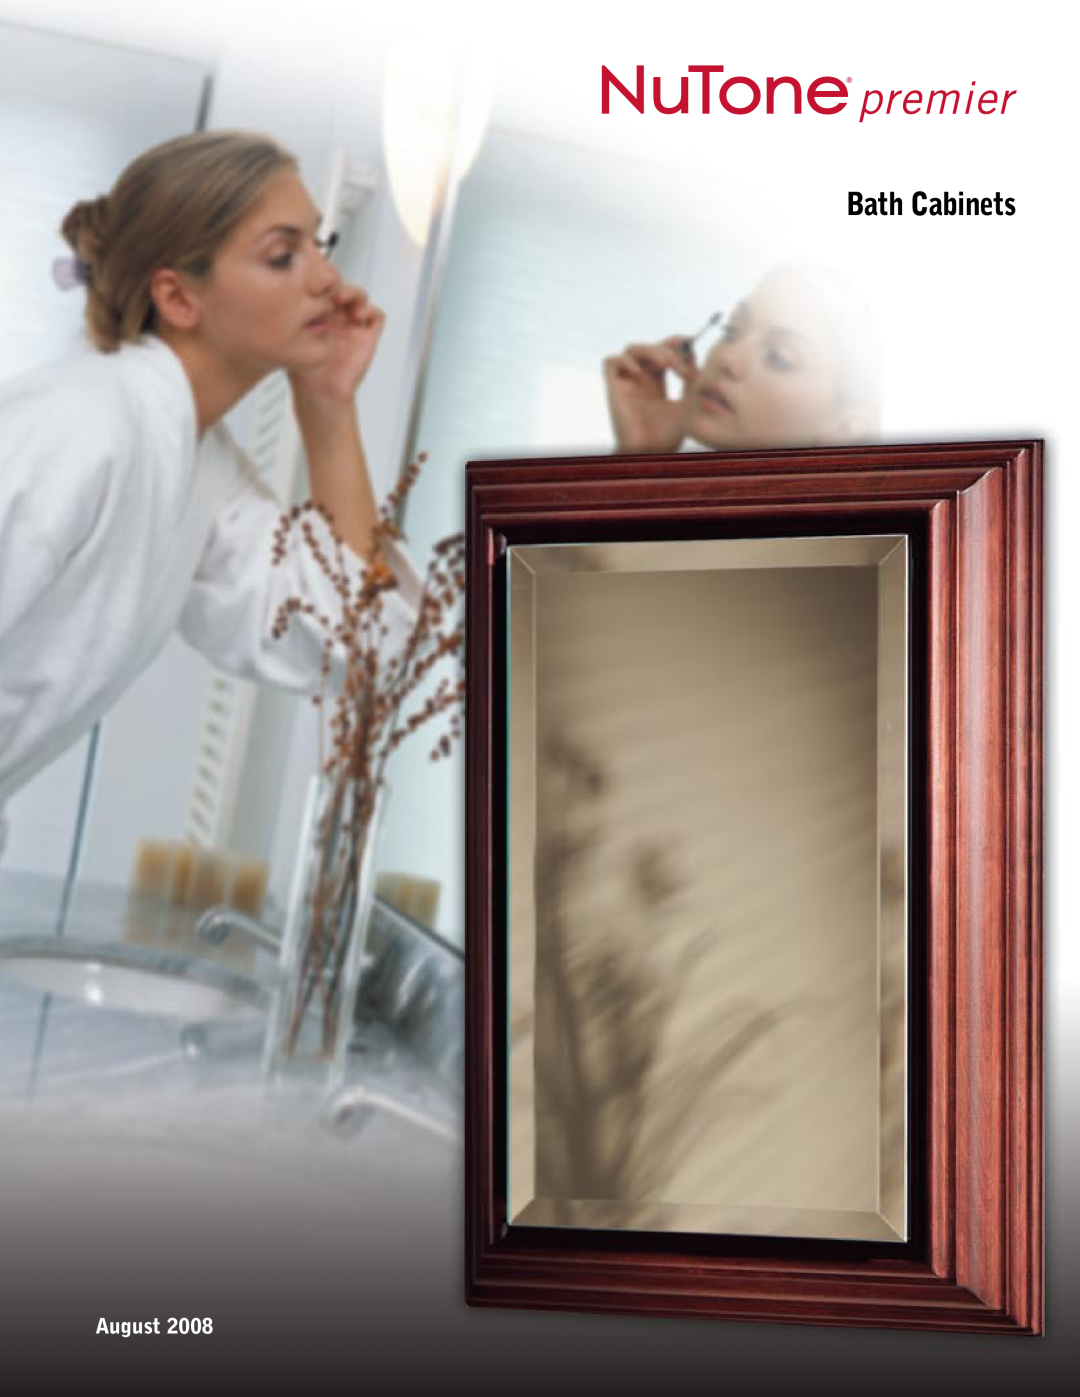 Broan Premier manual Bath Cabinets, August 